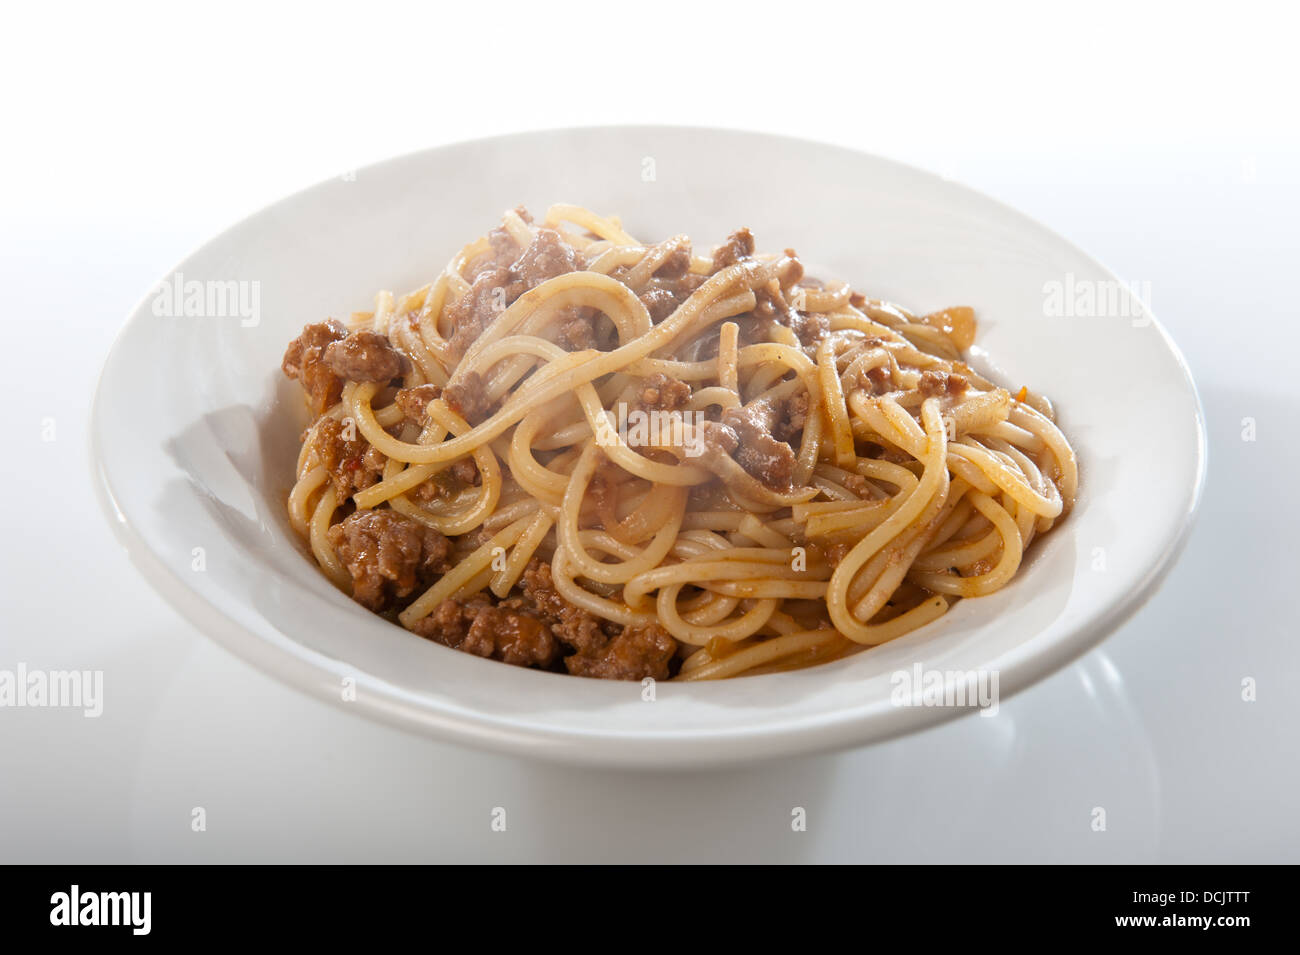 A single serving of Spaghetti bolognese. Stock Photo